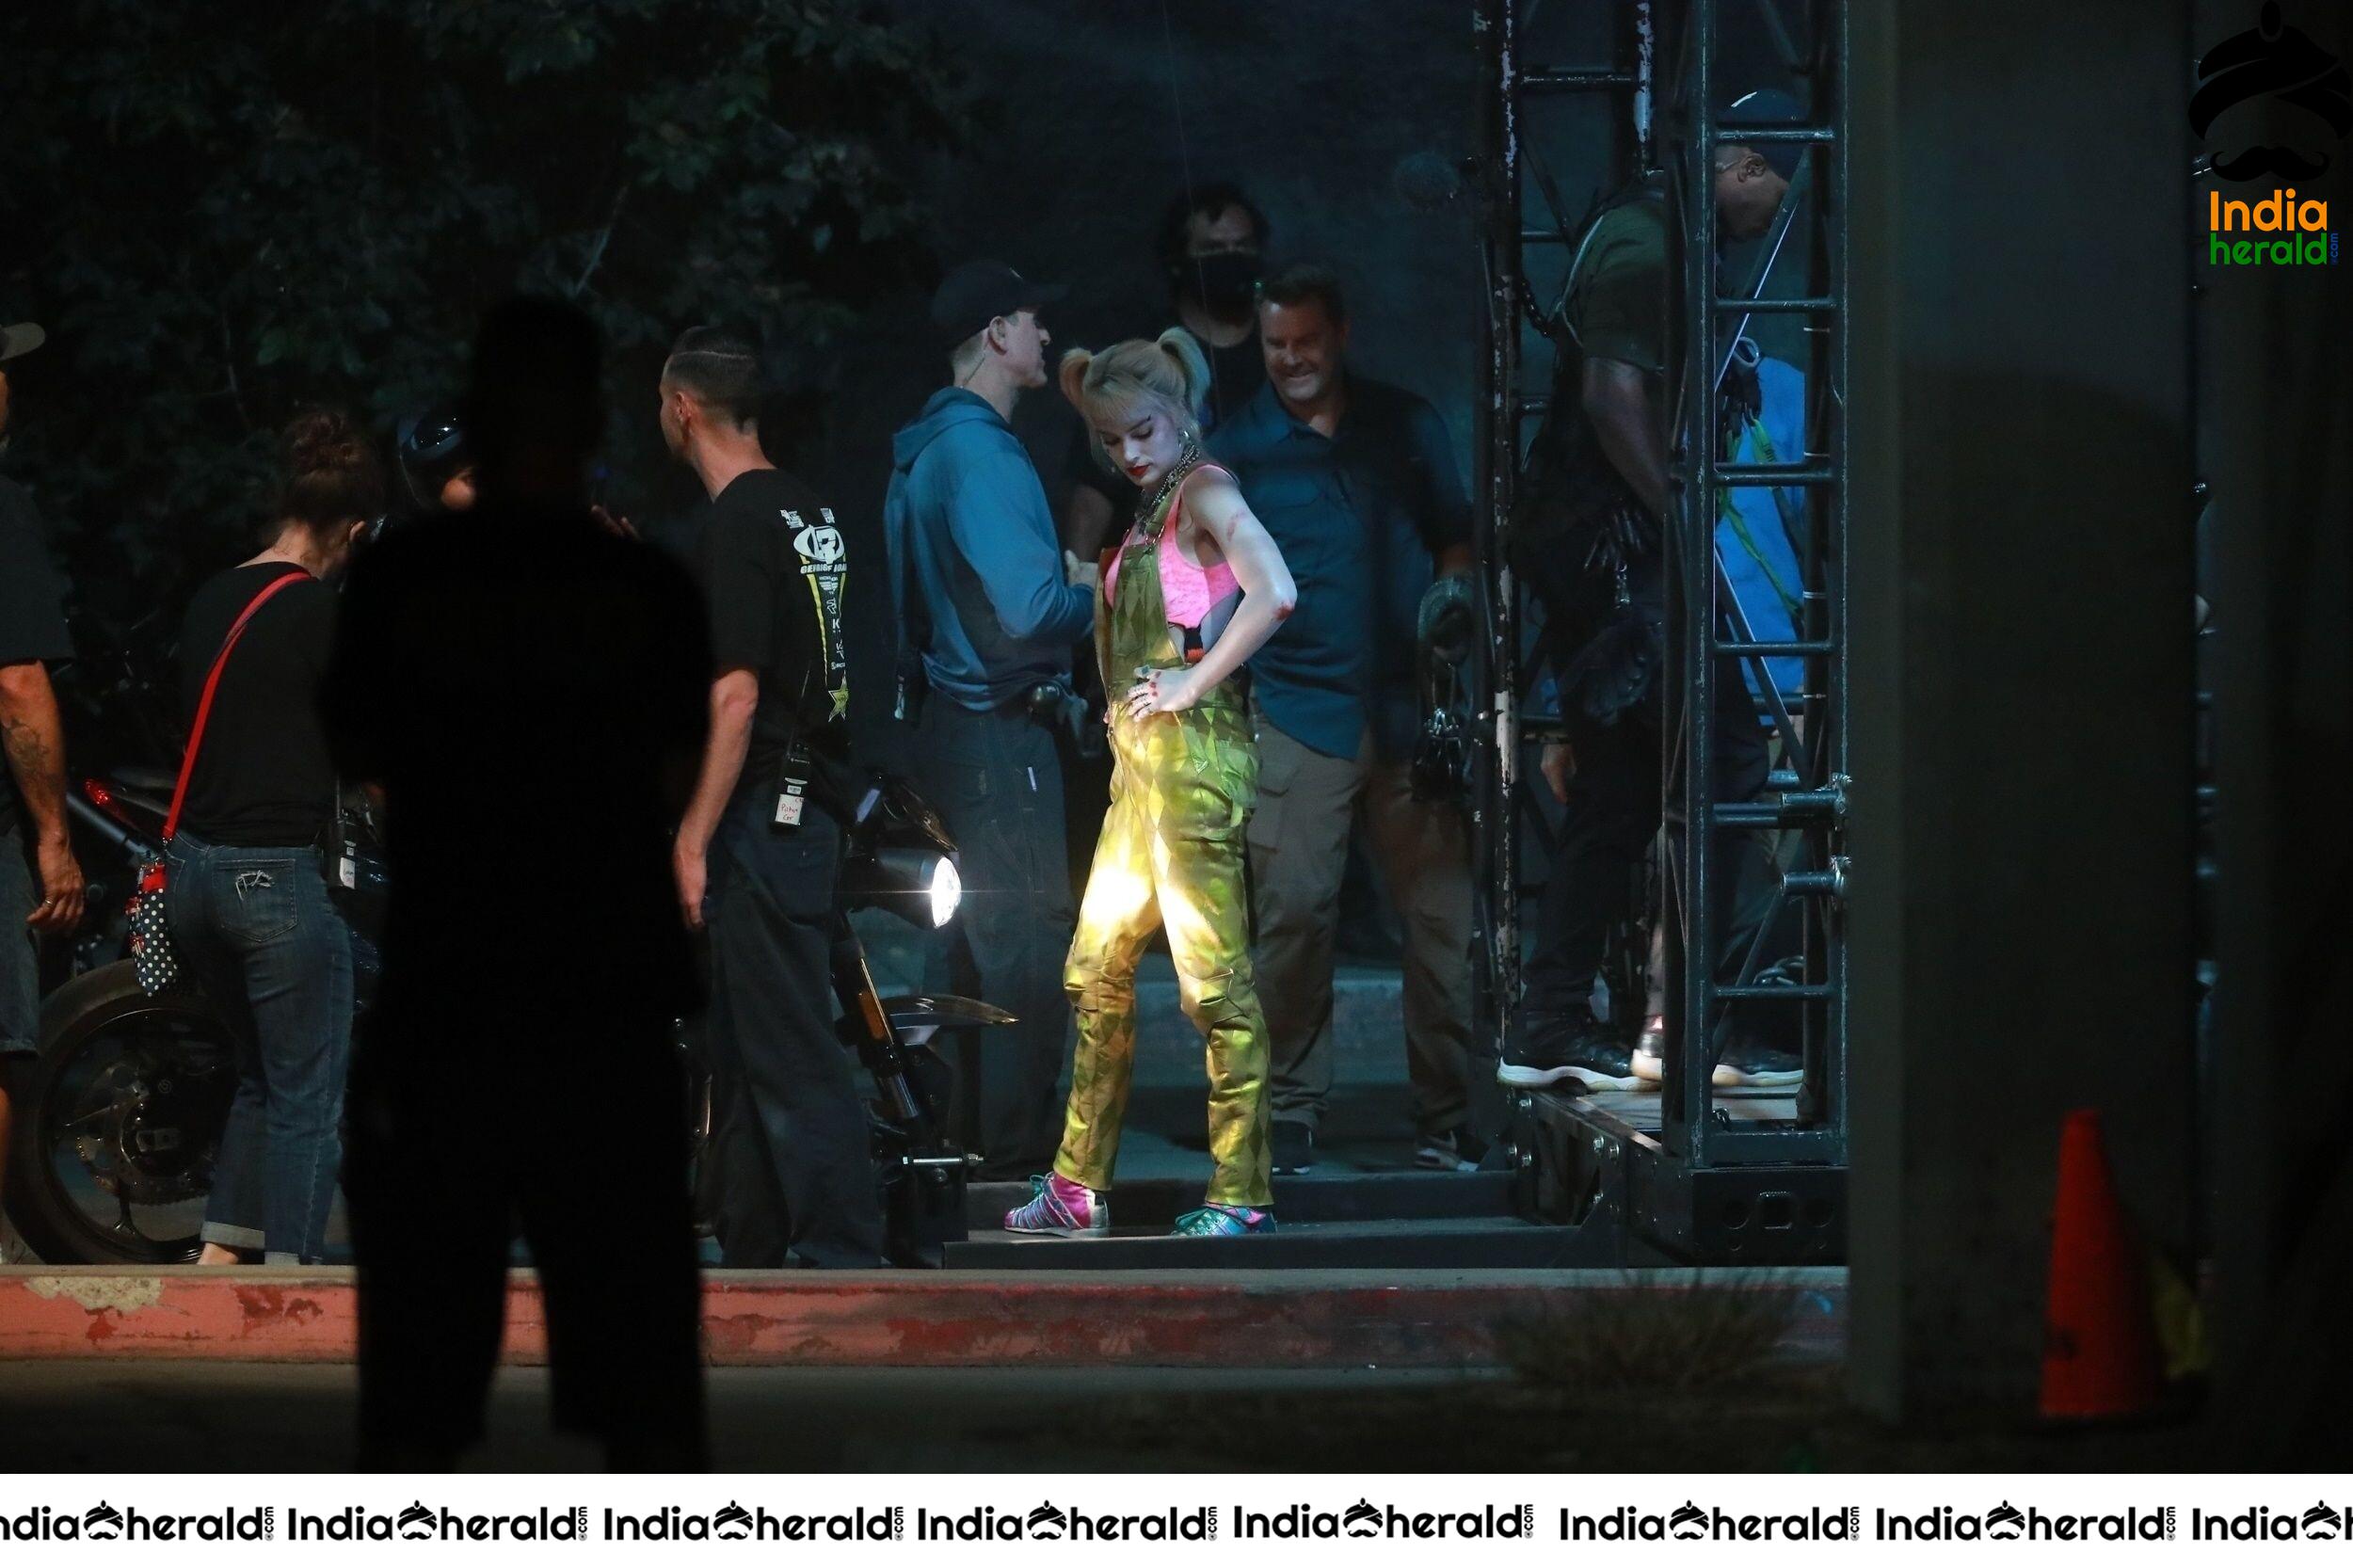 India Herald Exclusive Margot Robbie On The Sets Of Birds Of Prey At LA Set 1